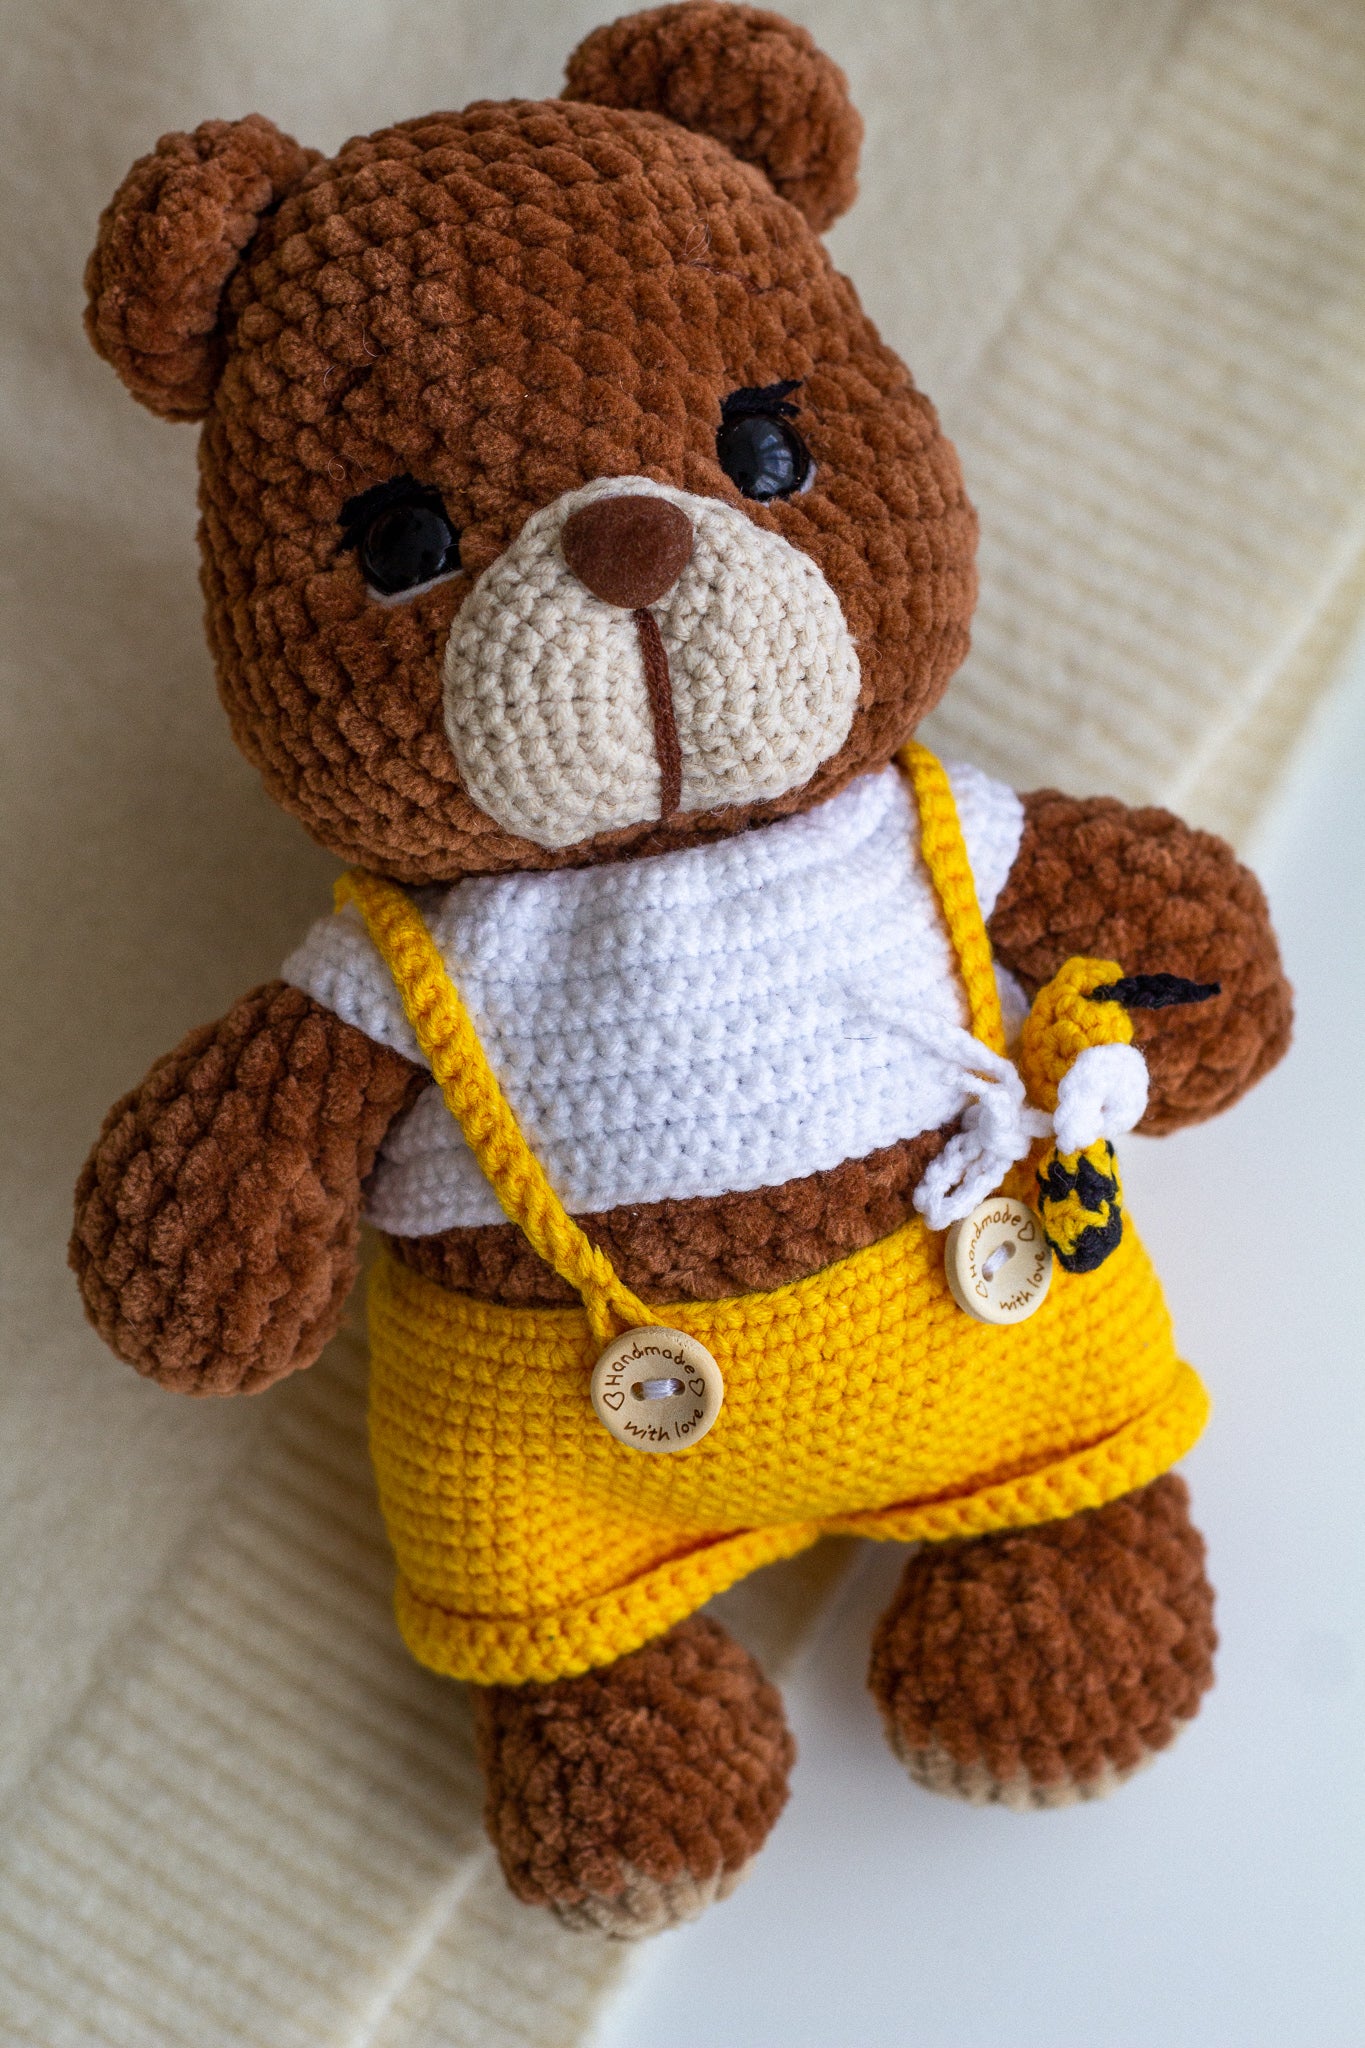 Handmade crochet Teddy Bear in Overalls